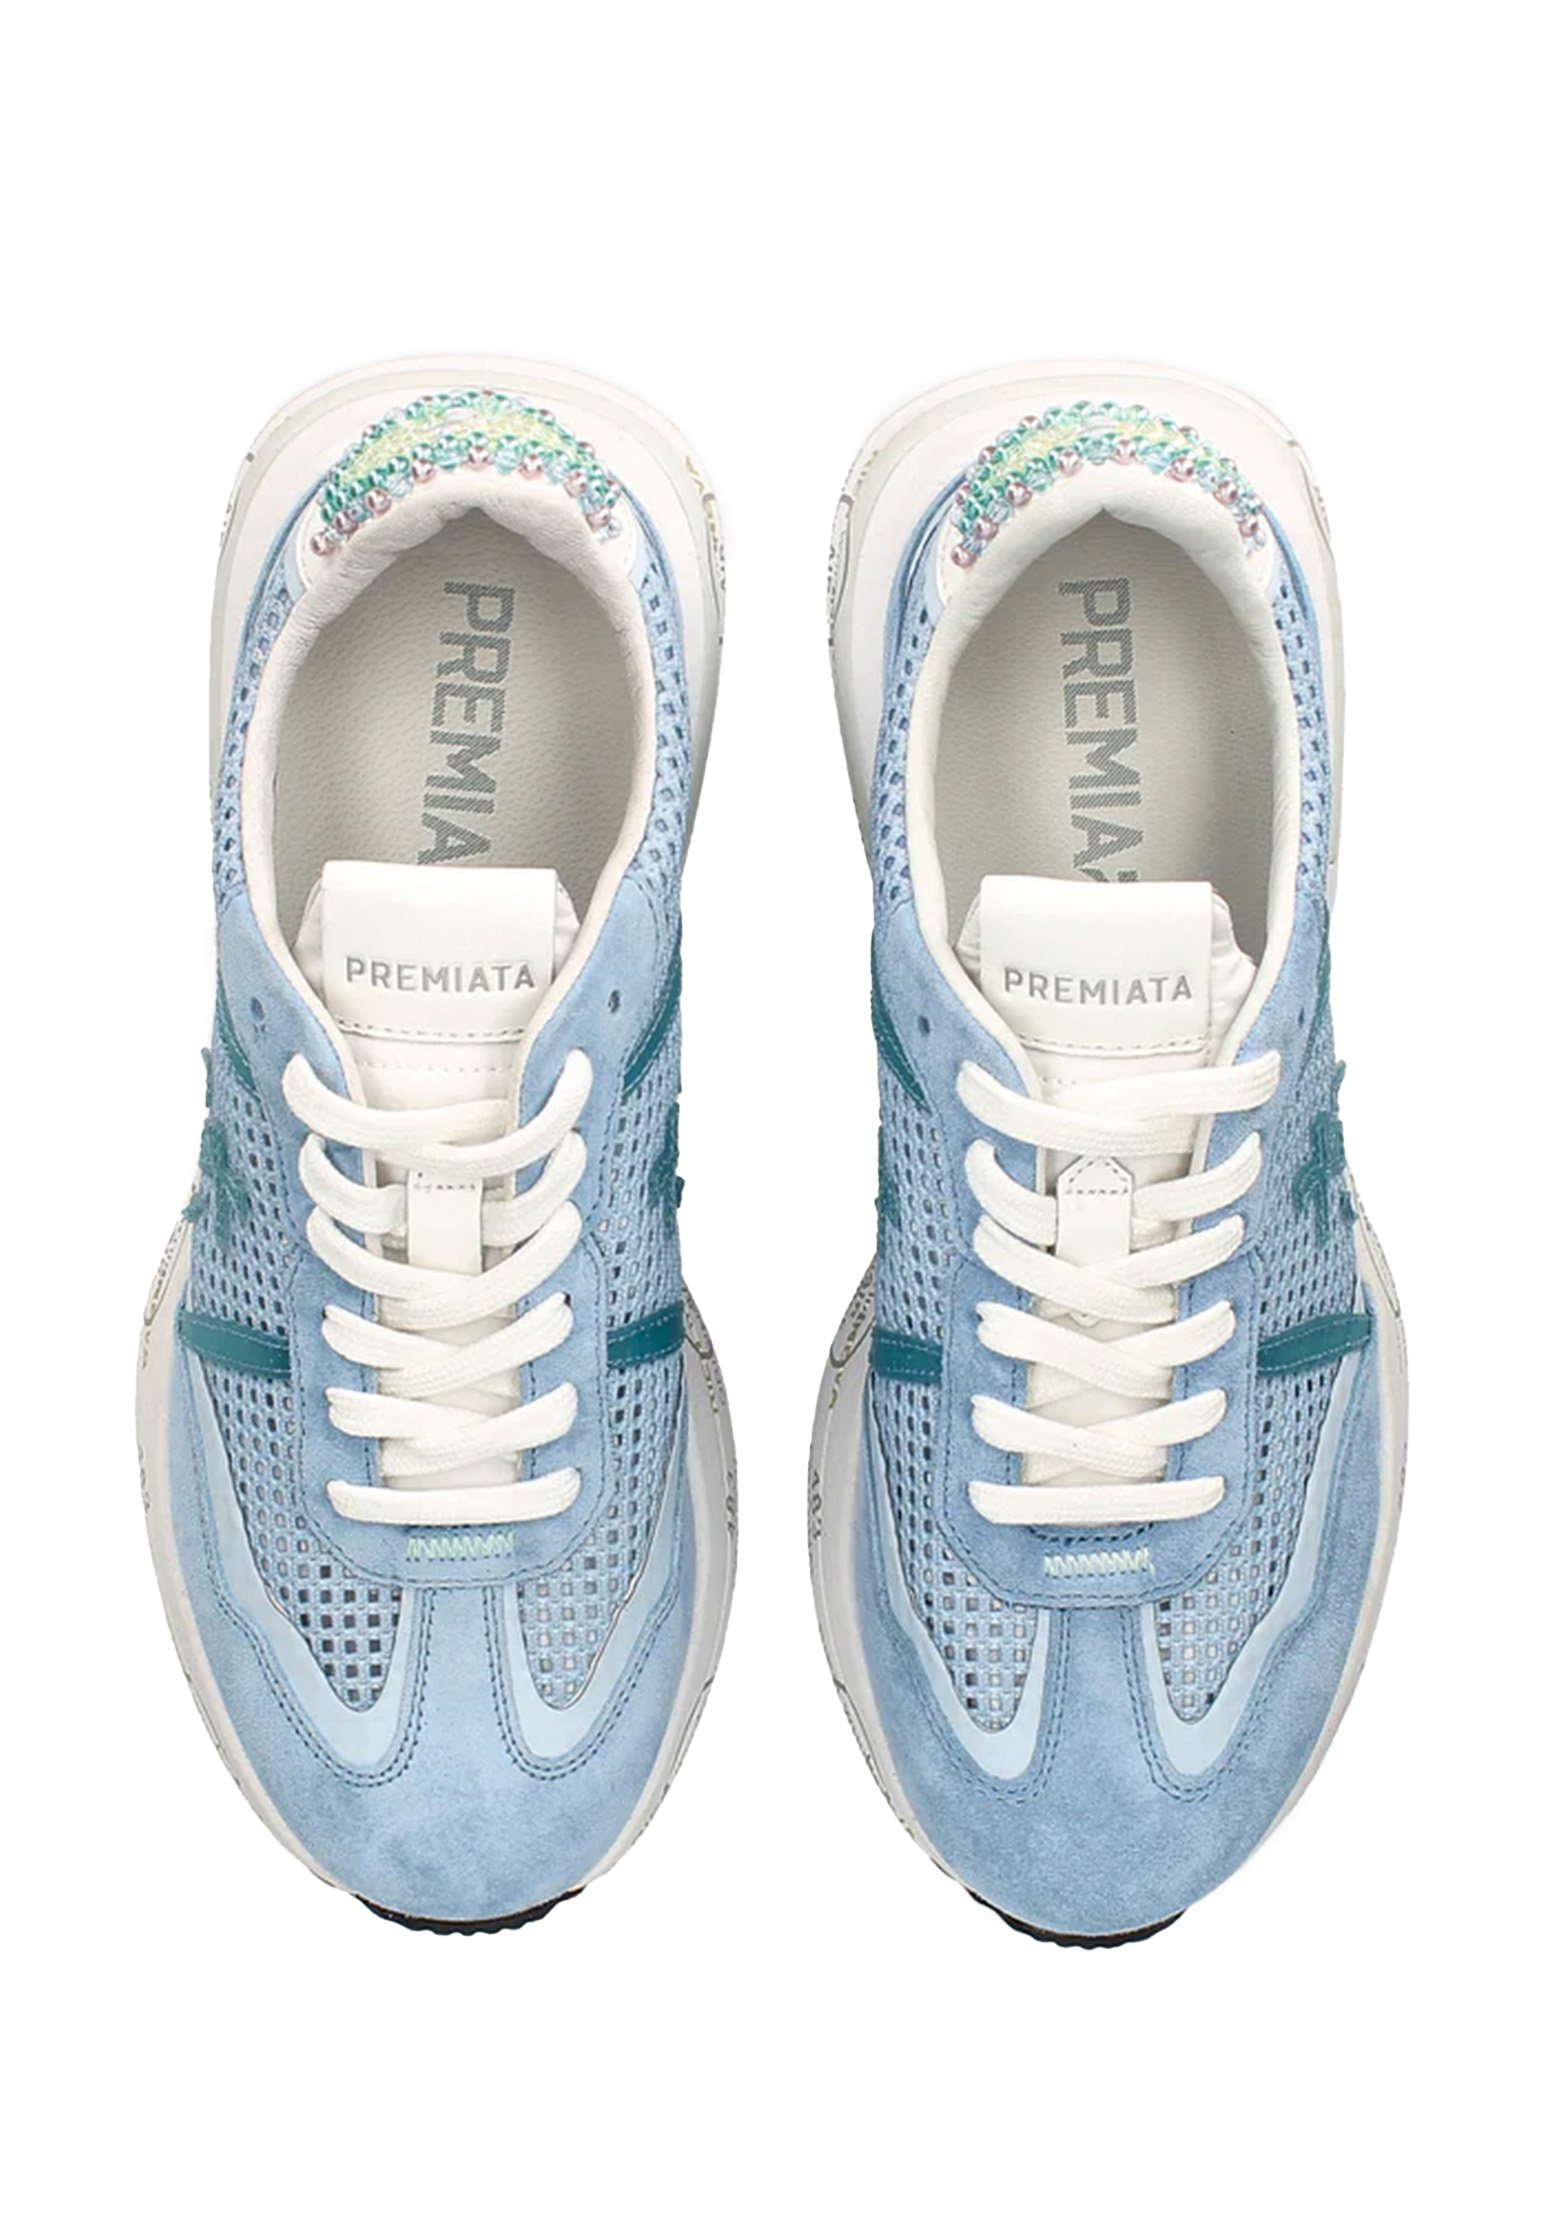 Sneakers PREMIATA Color: light blue (Code: 4544) in online store Allure